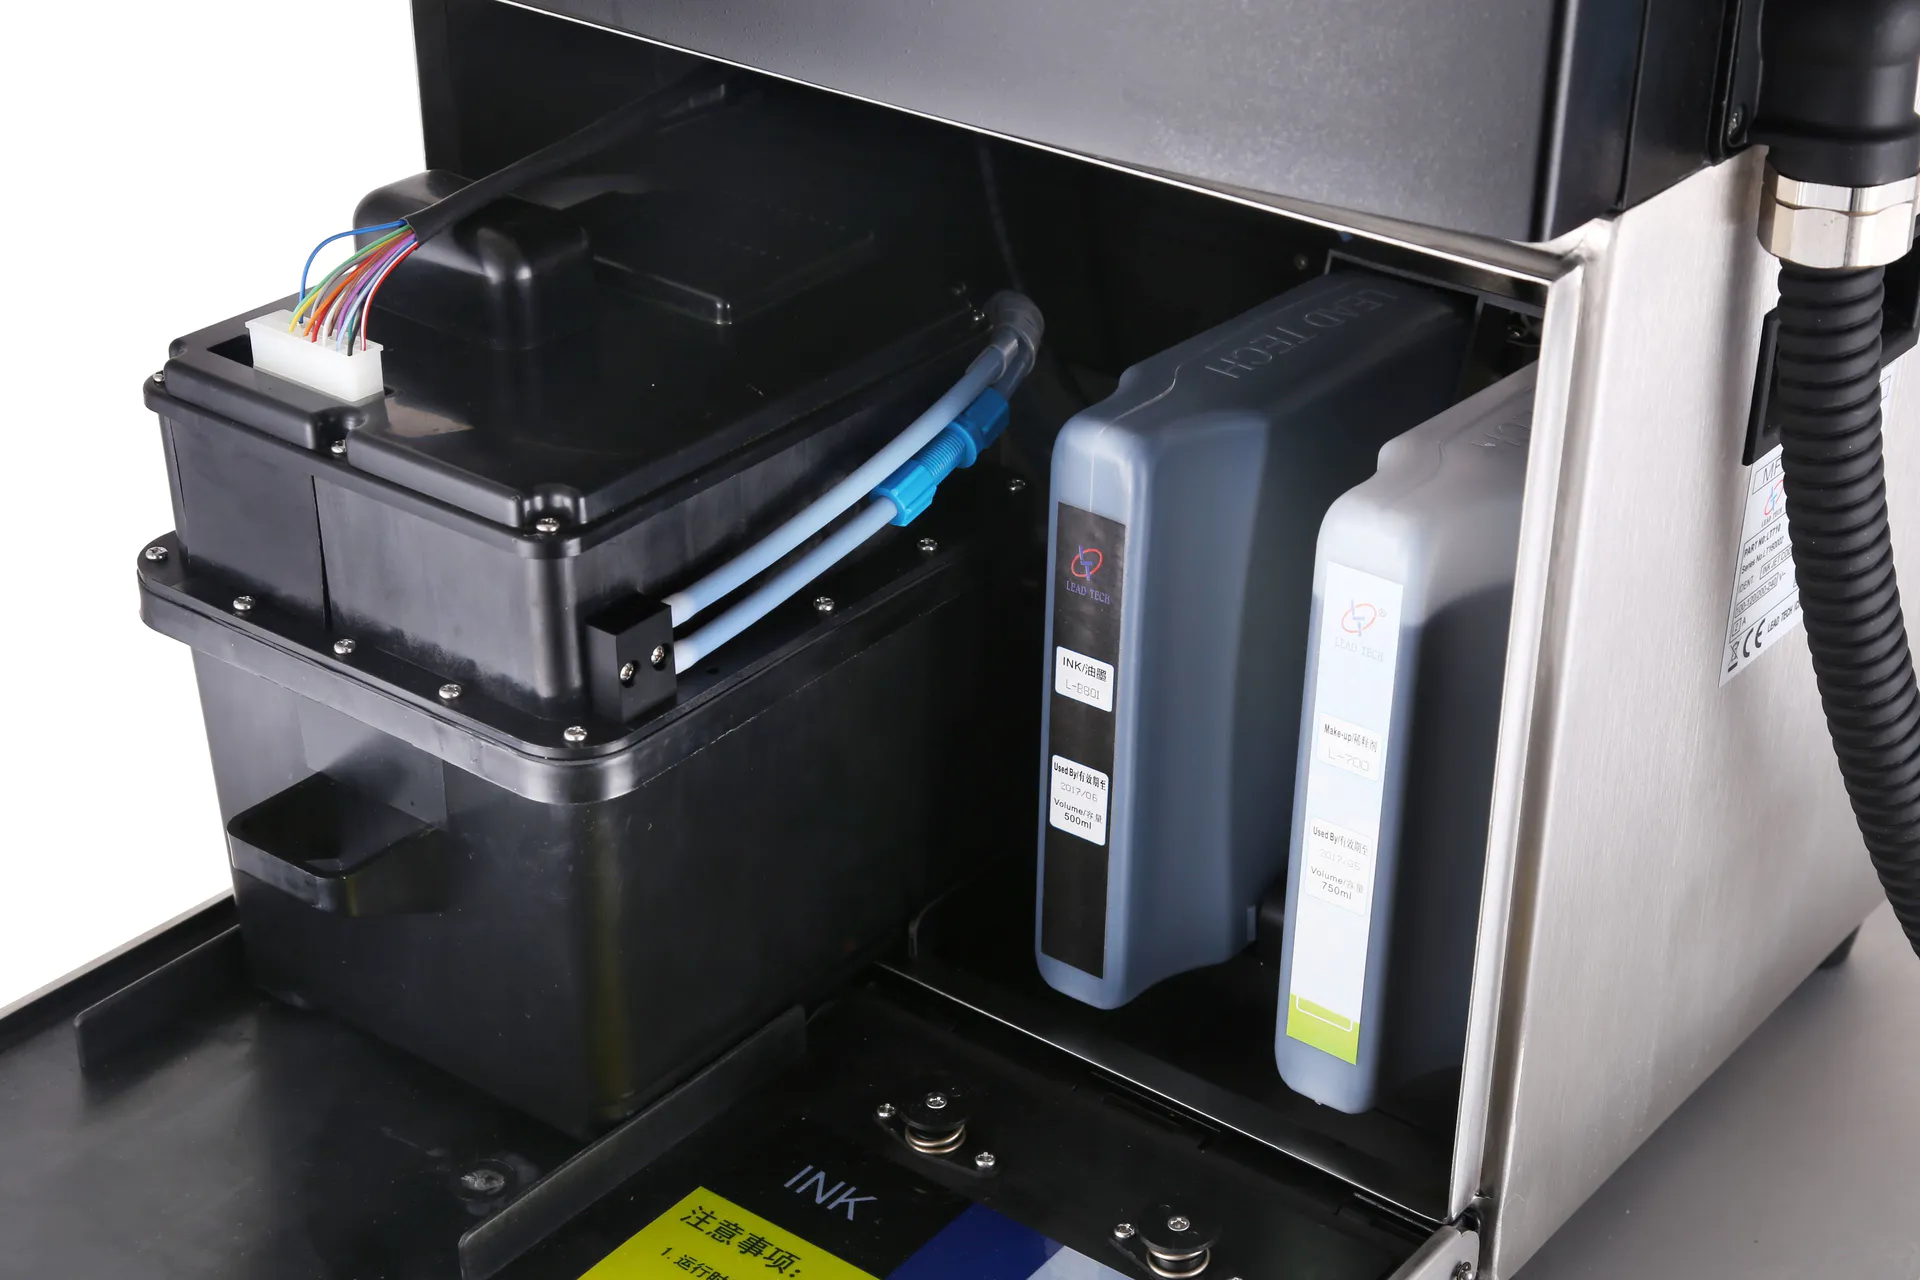 Lead Tech Cij Digital Printer for Cable Printing.